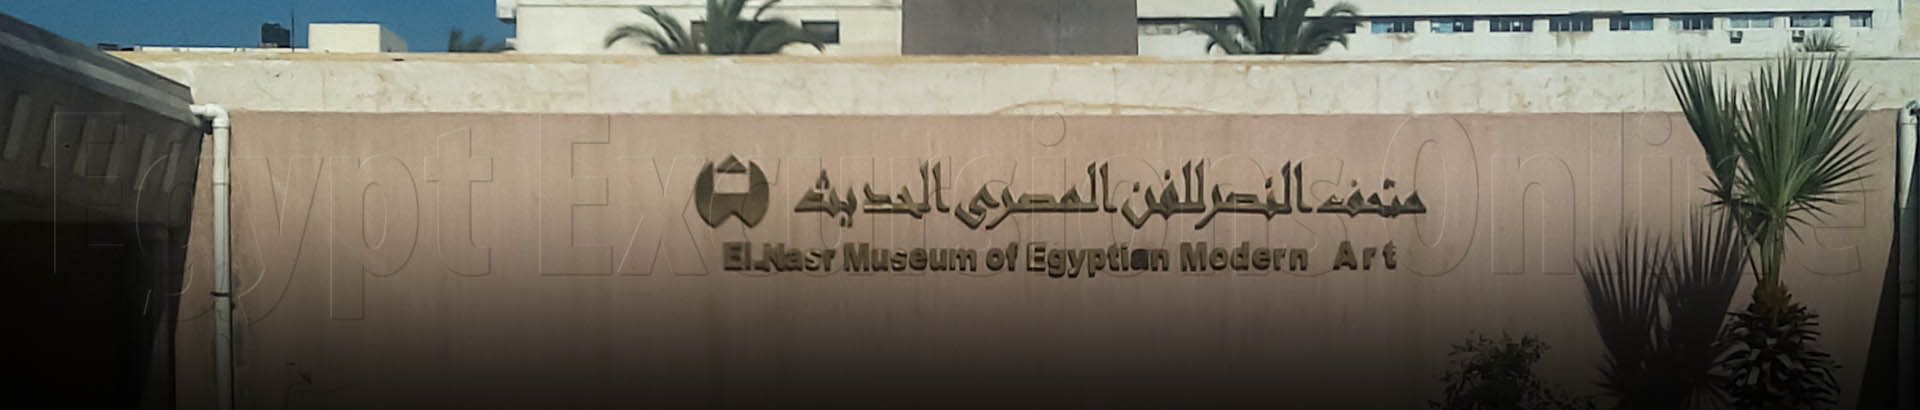 Museum of Modern Egyptian Art